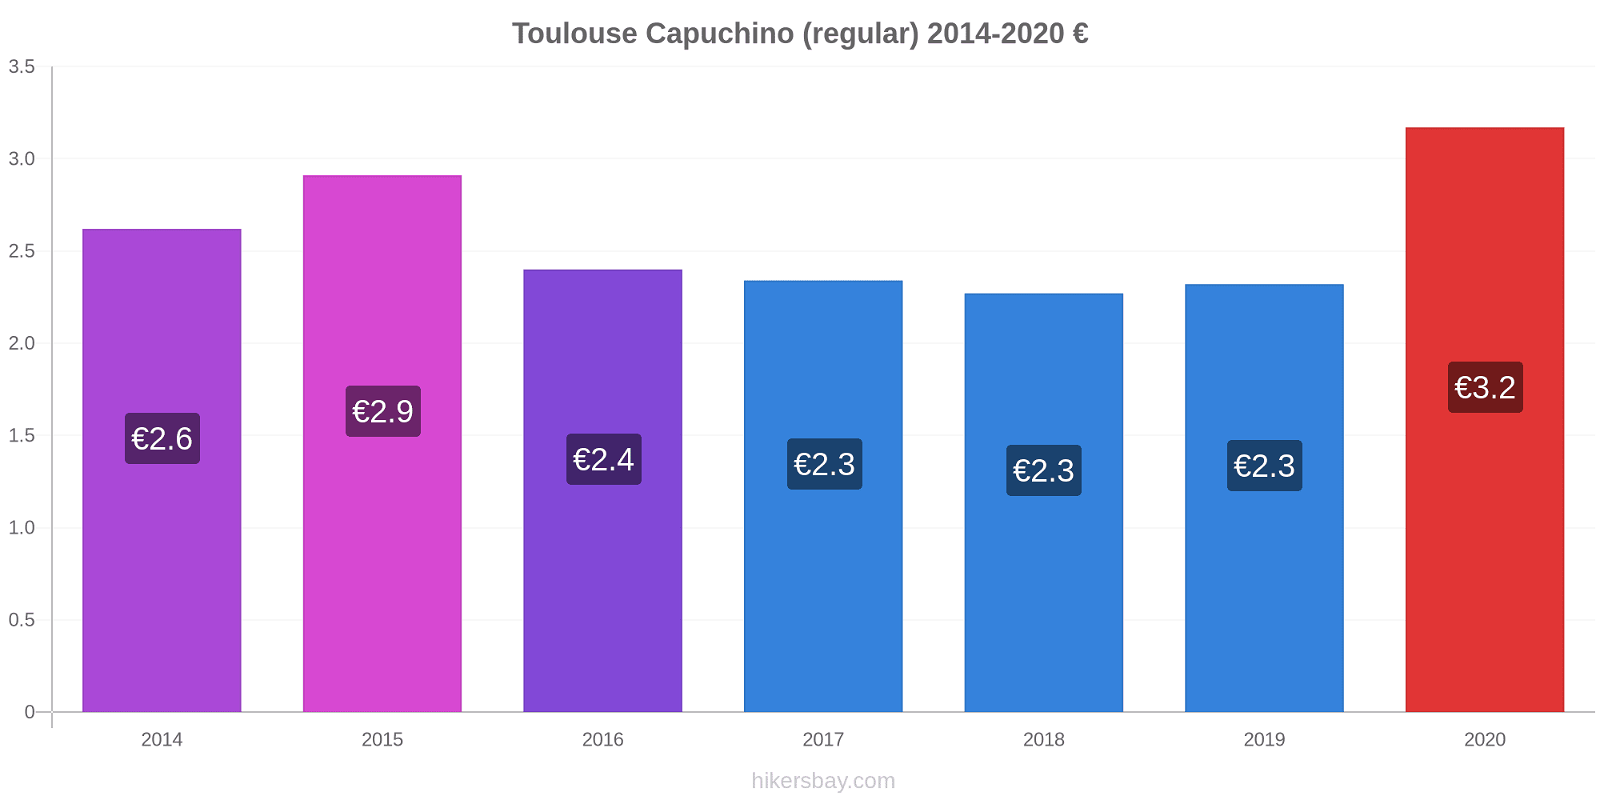 Toulouse cambios de precios Capuchino (regular) hikersbay.com